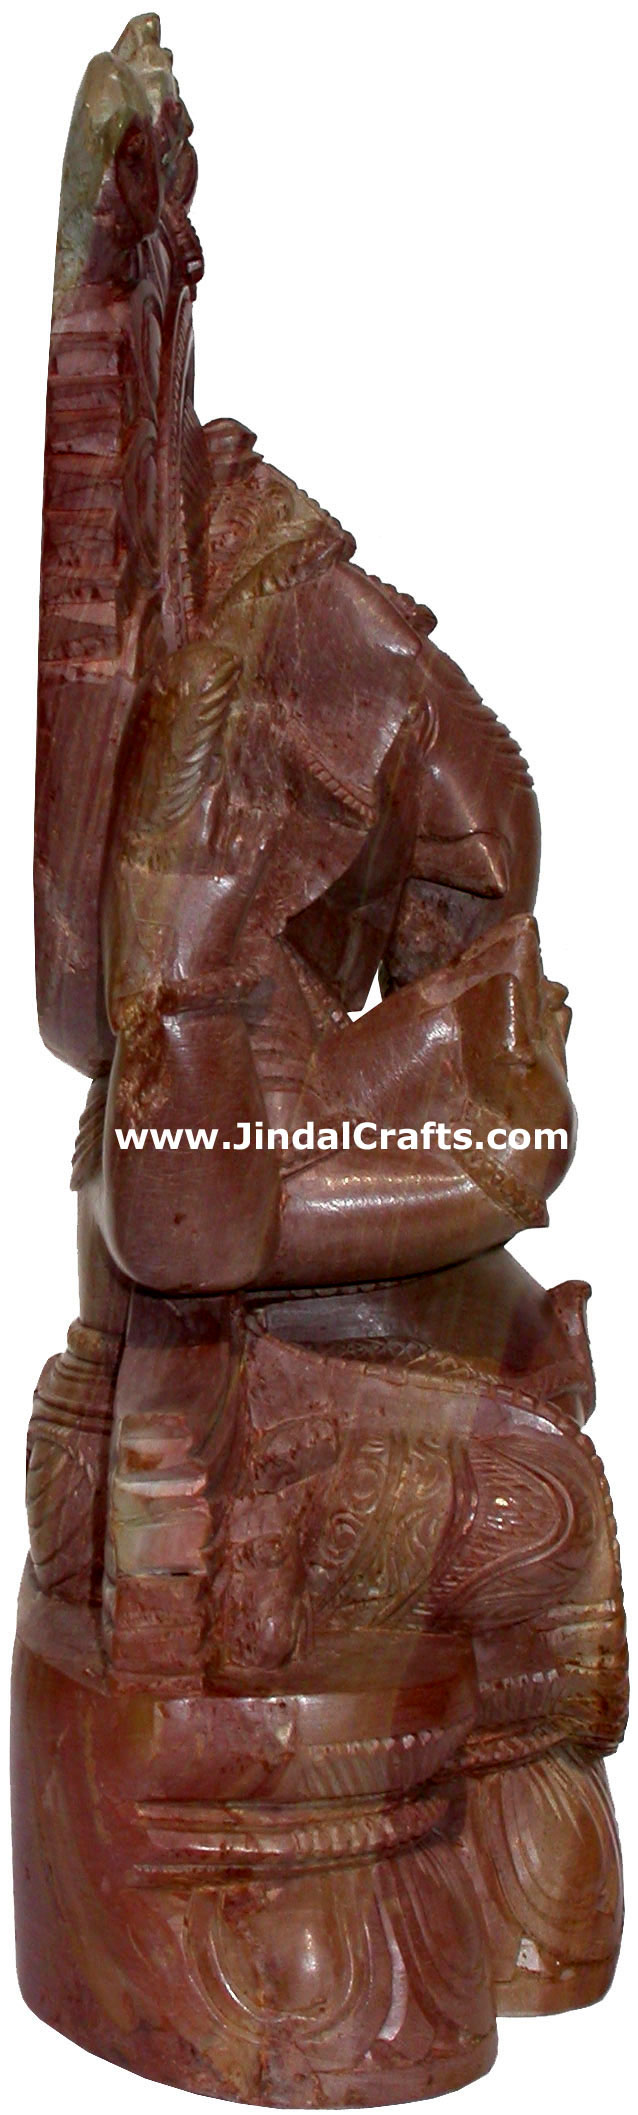 Lord Ganesha Ganpati Vinayaka Hand Carved Stone Figure Indian Carving Arts Hindu